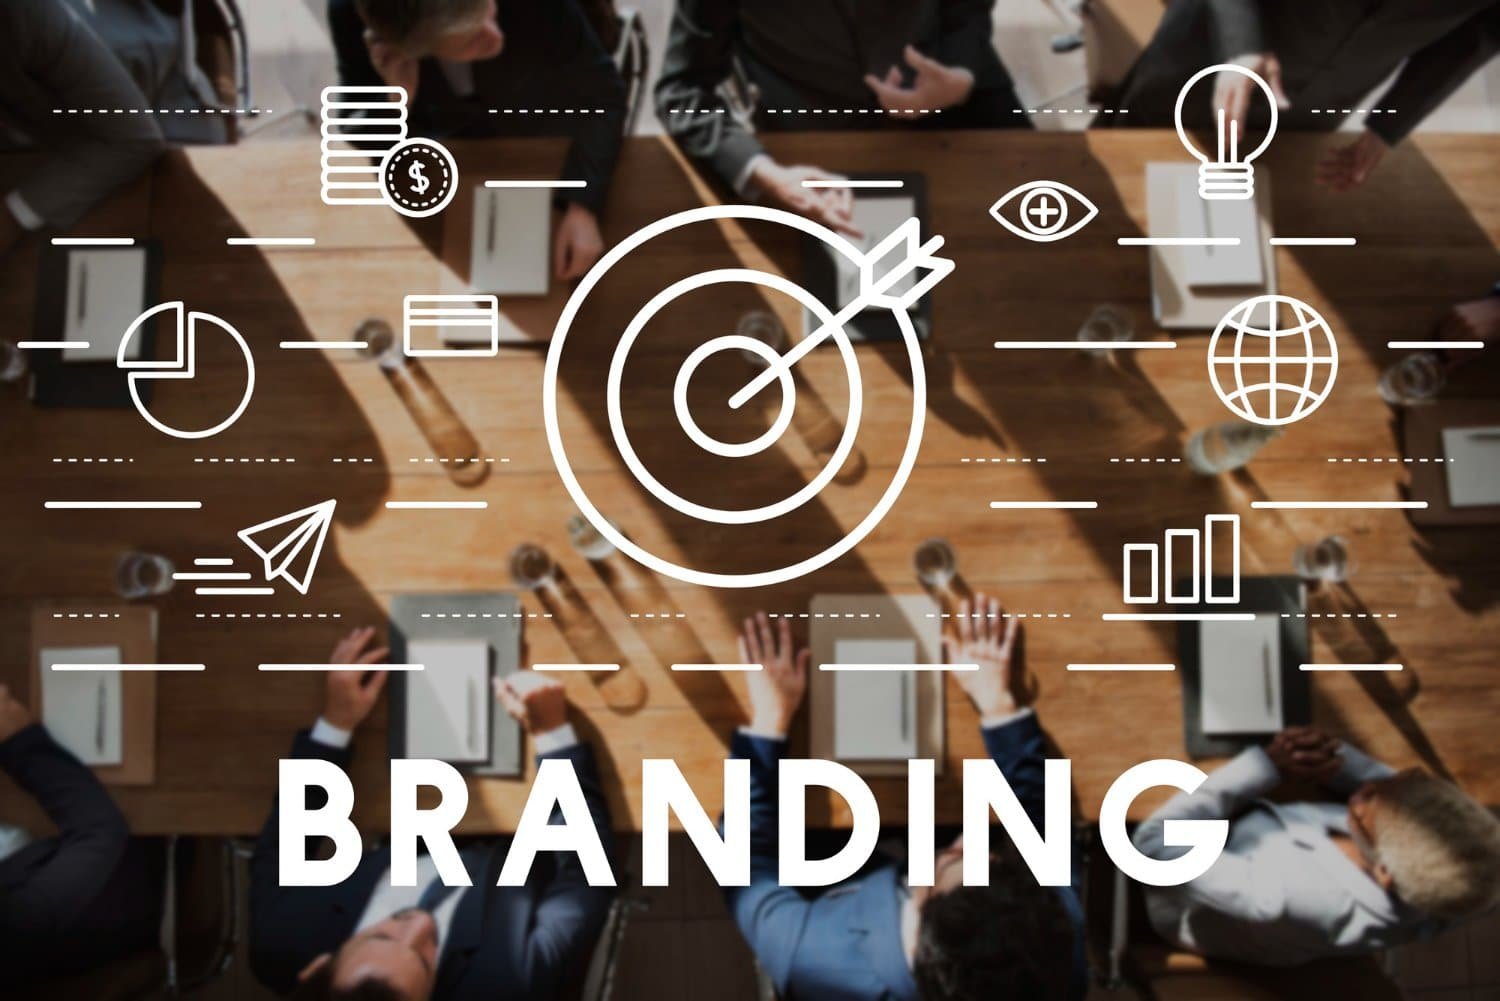 Digital Branding: Building a Strong Online Presence